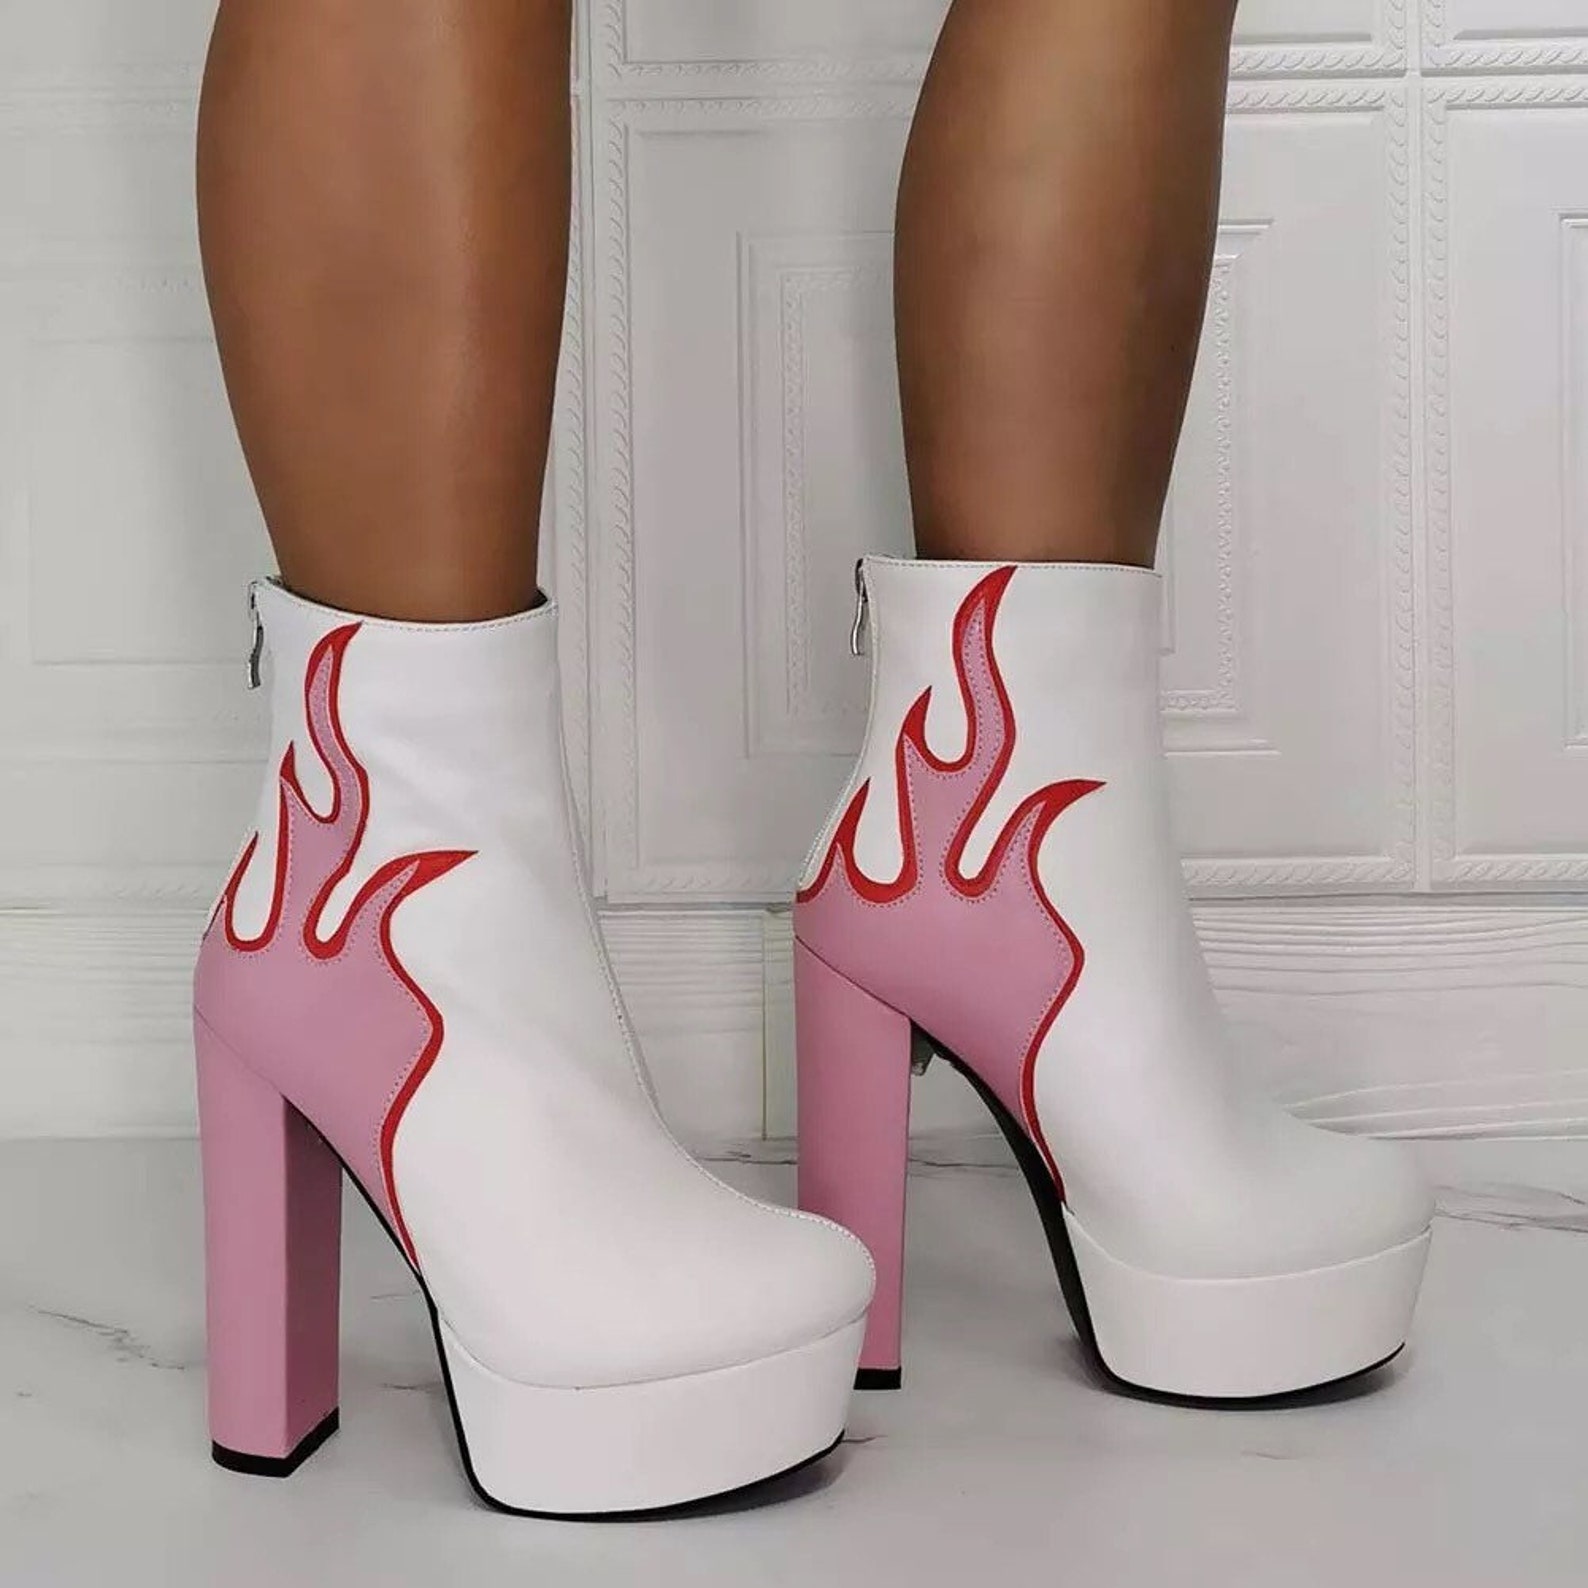 Fire Heels Unique Shoes & Footwear | Etsy